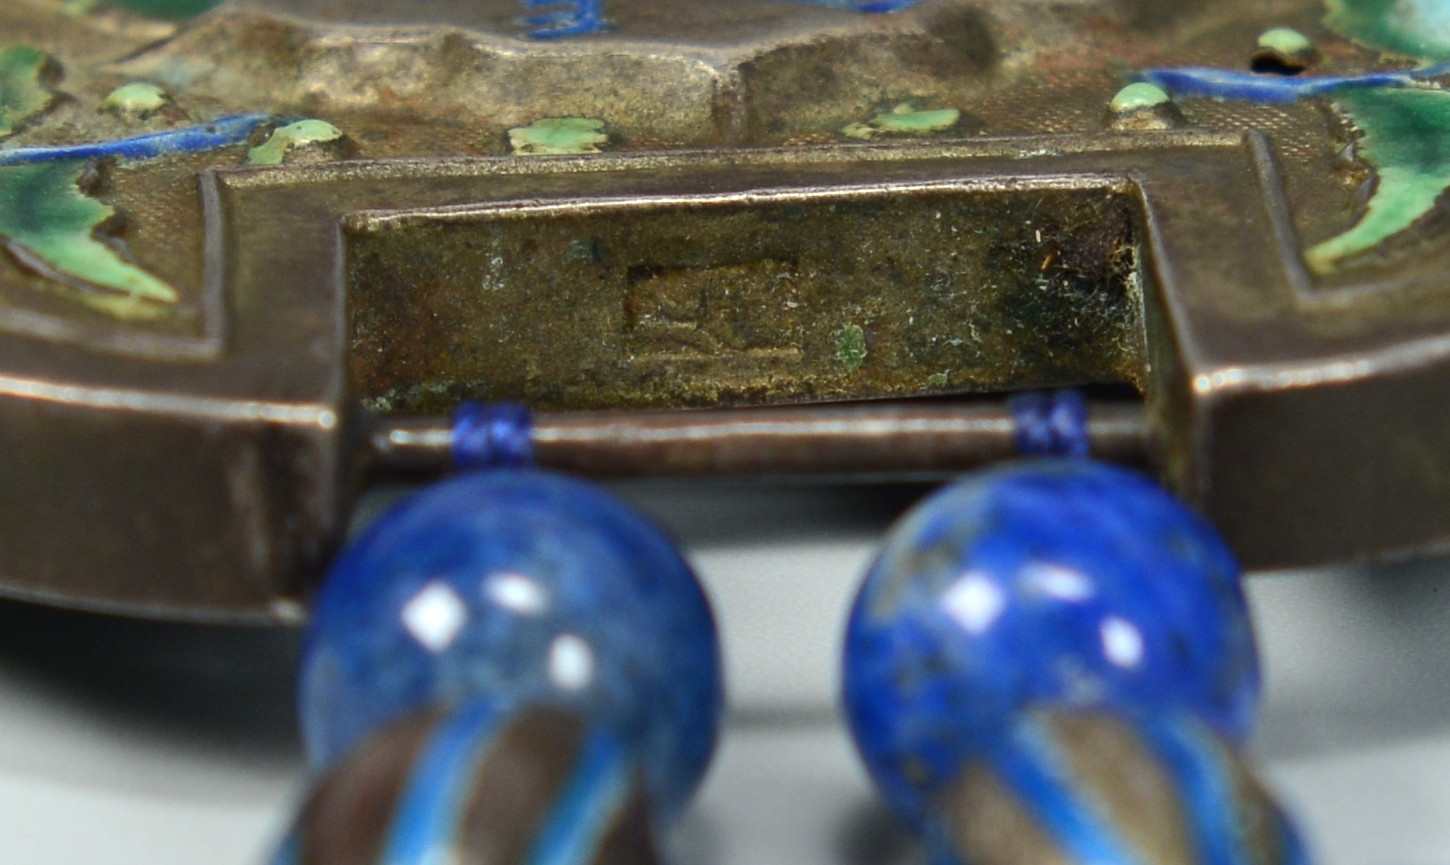 Lot 12: Chinese Silver Lock Pendant